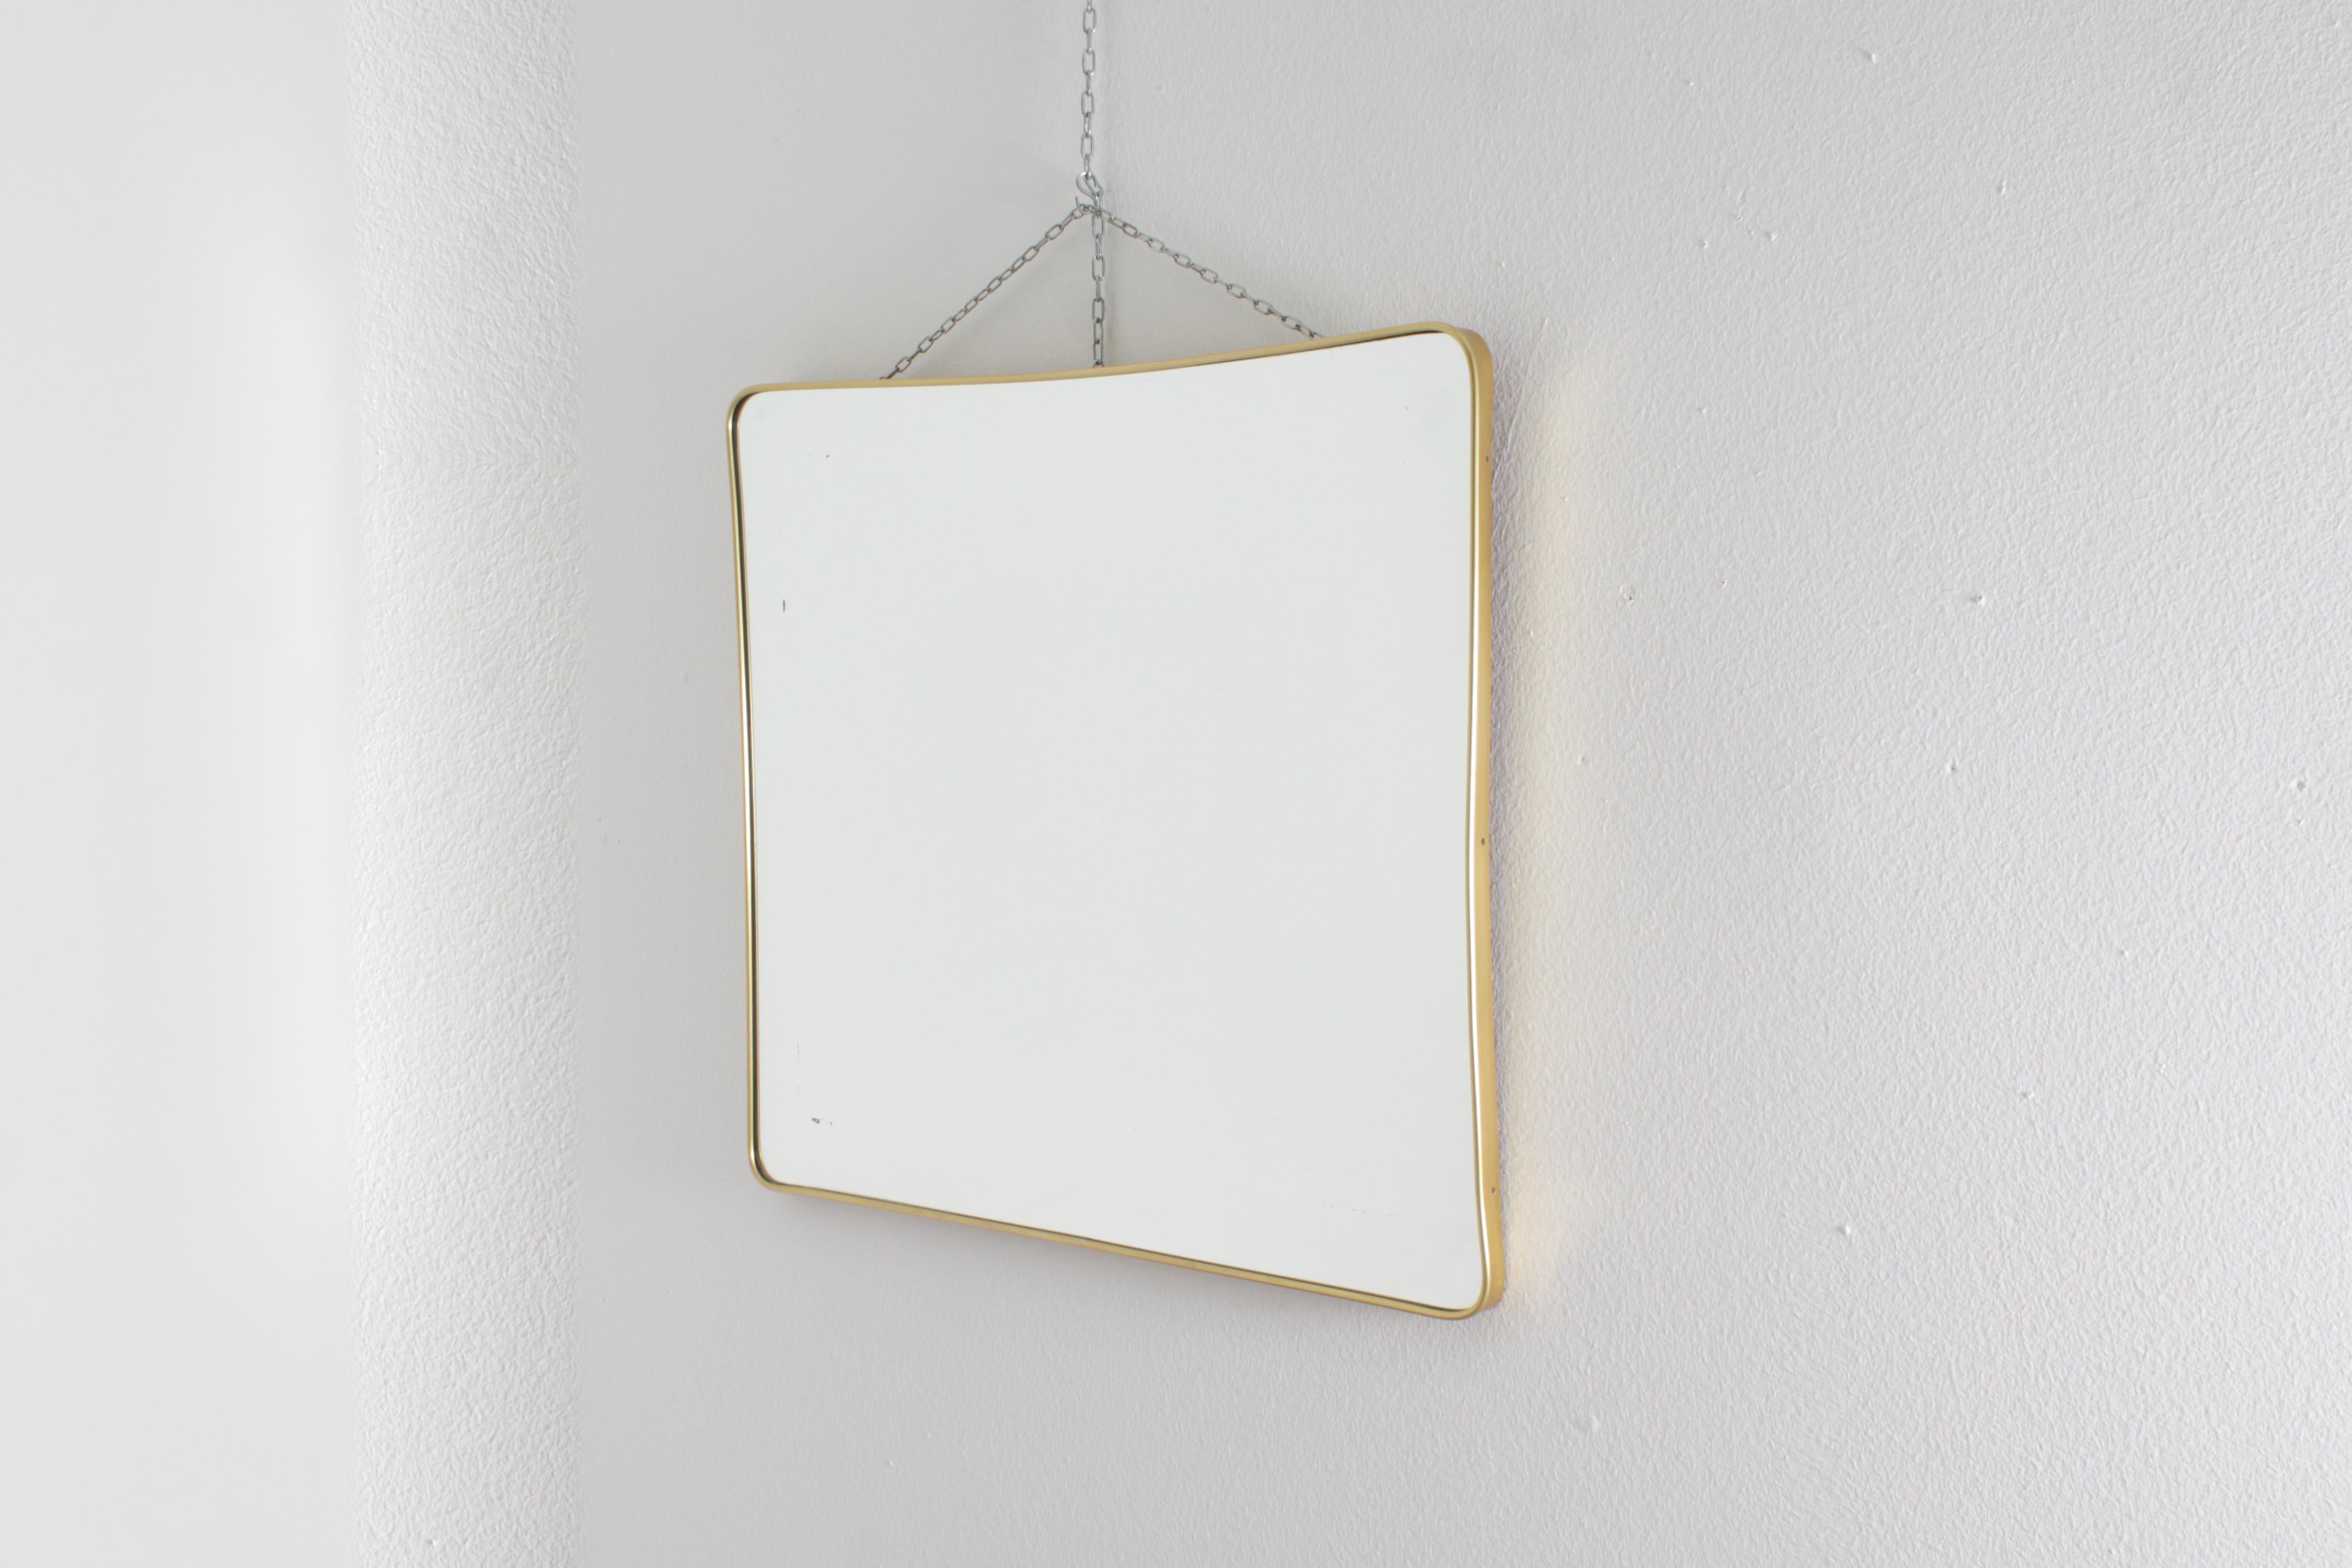 Italian Mid-Century Rectangular Wall Mirror with Golden Aluminum Frame 50s Italy For Sale